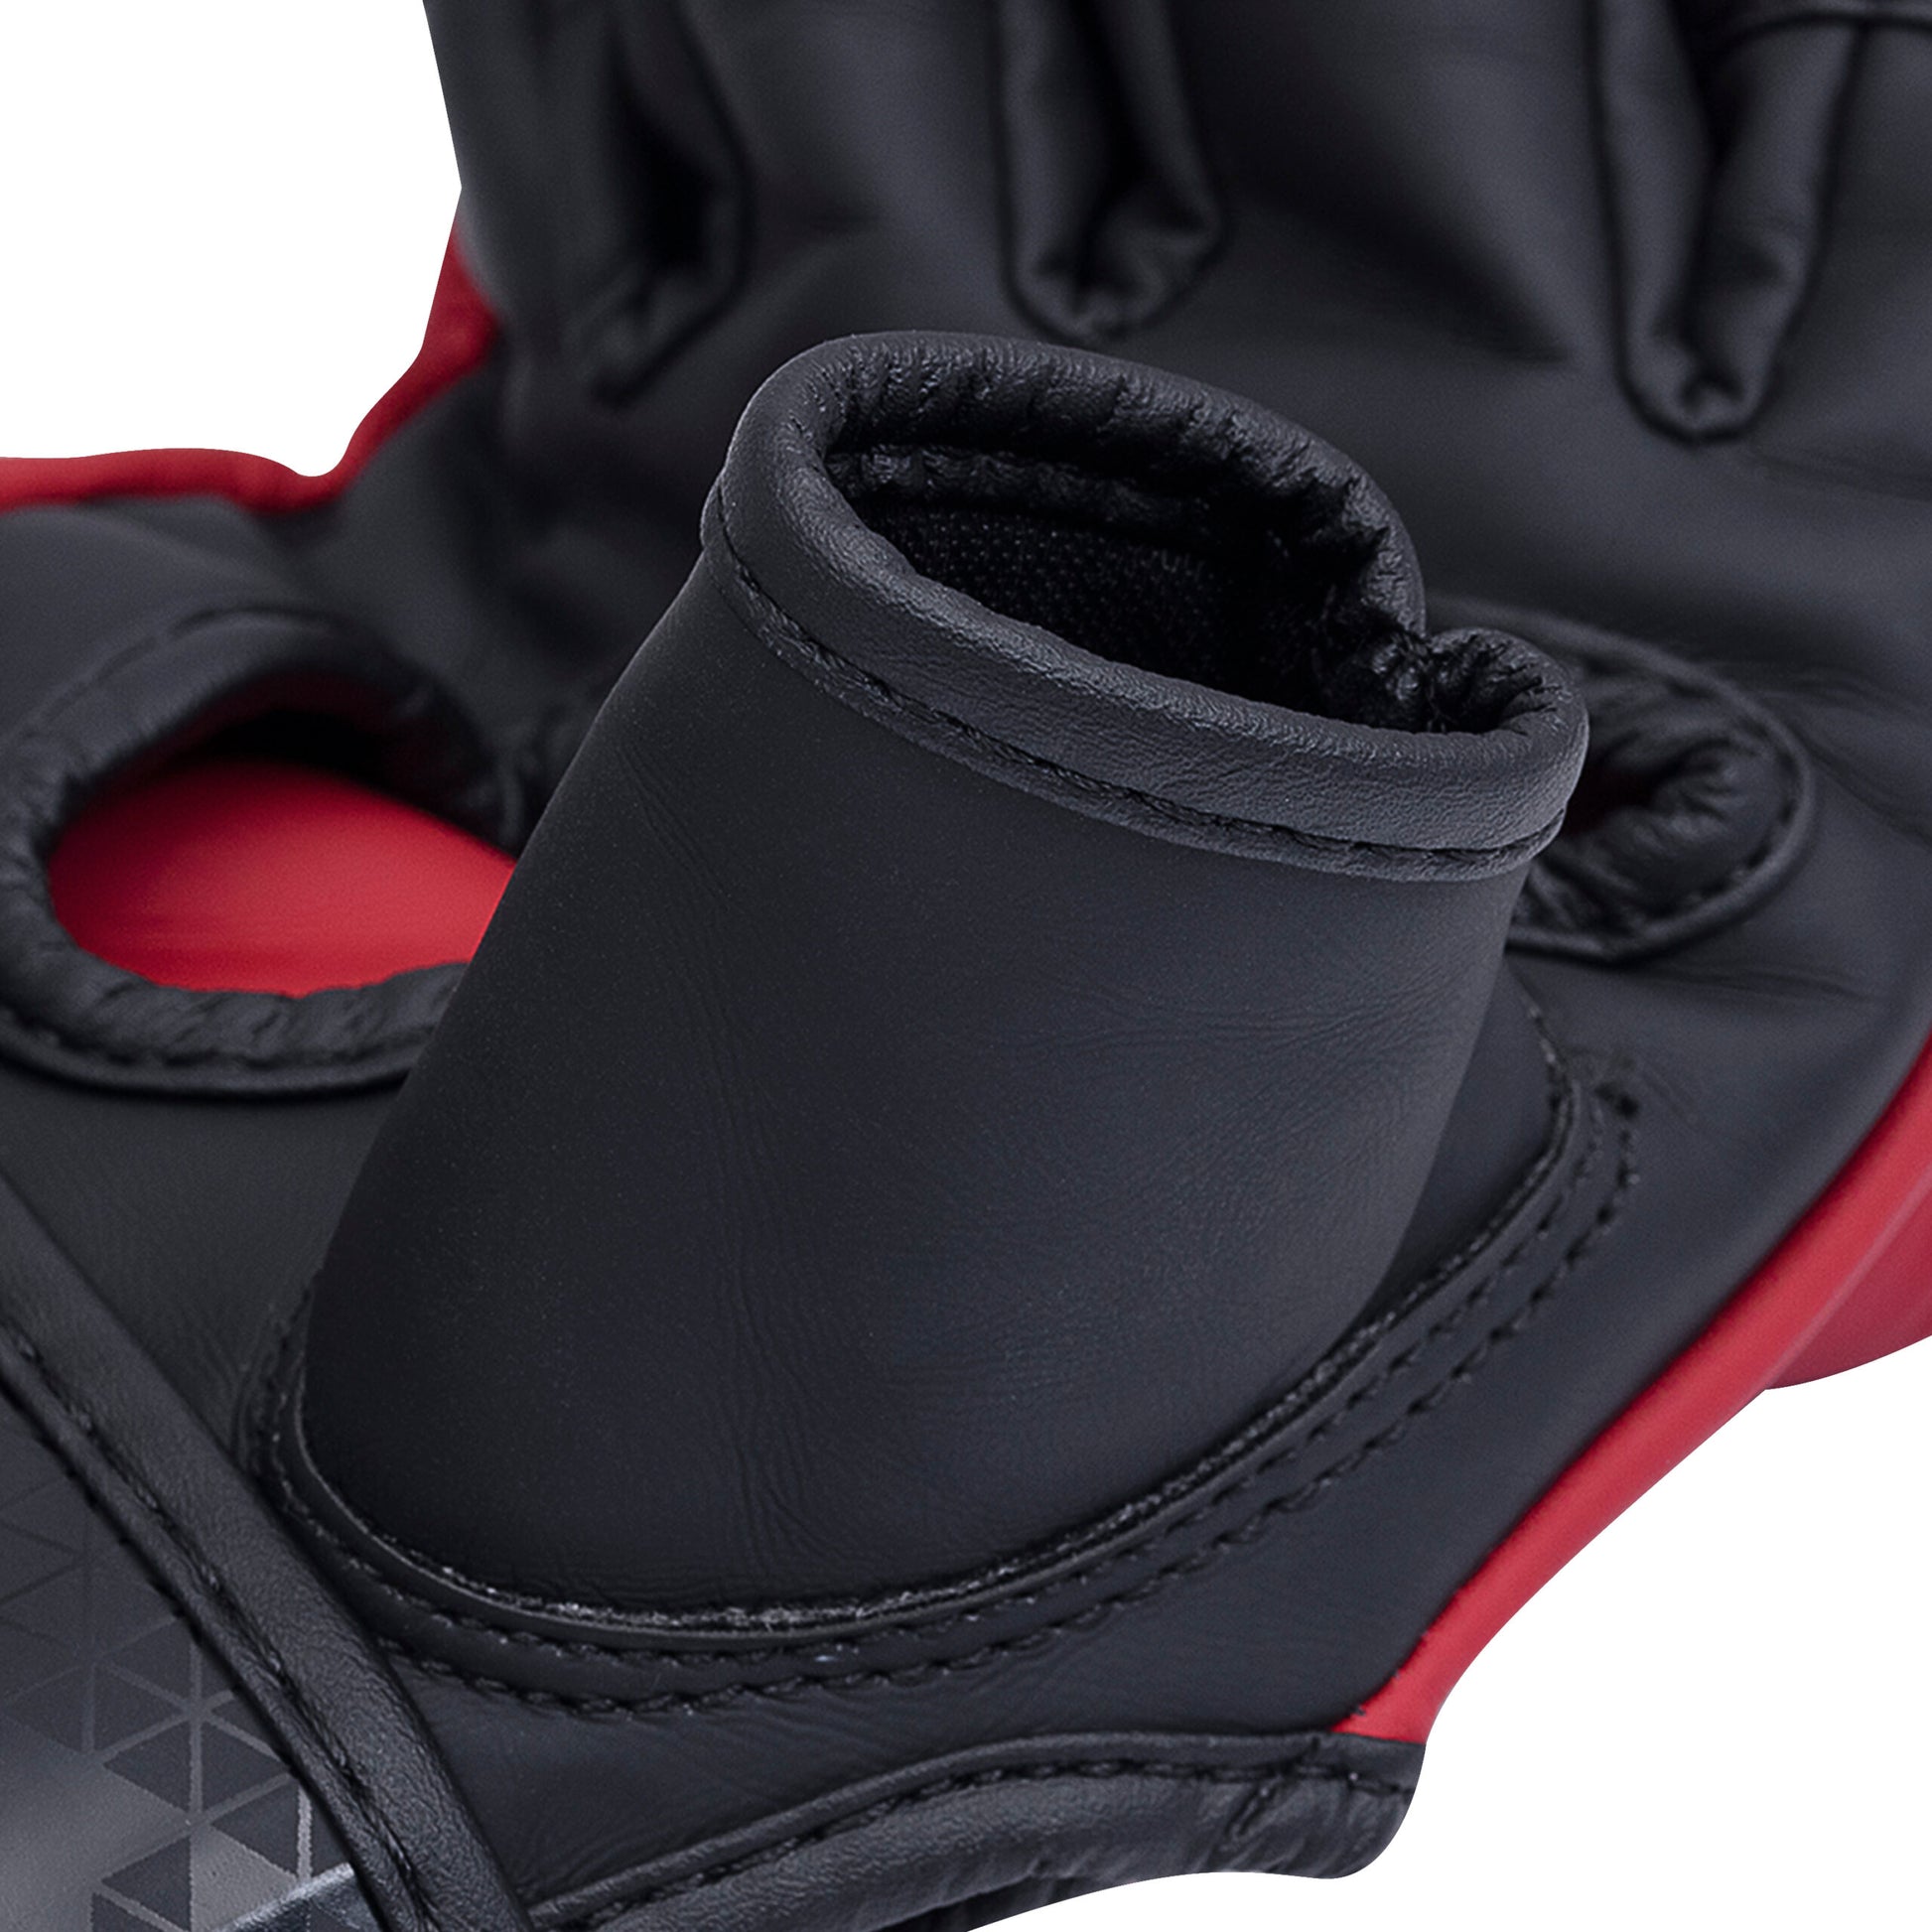 Adic50gg Adidas Combat 50 Grappling Glove Red Black 07